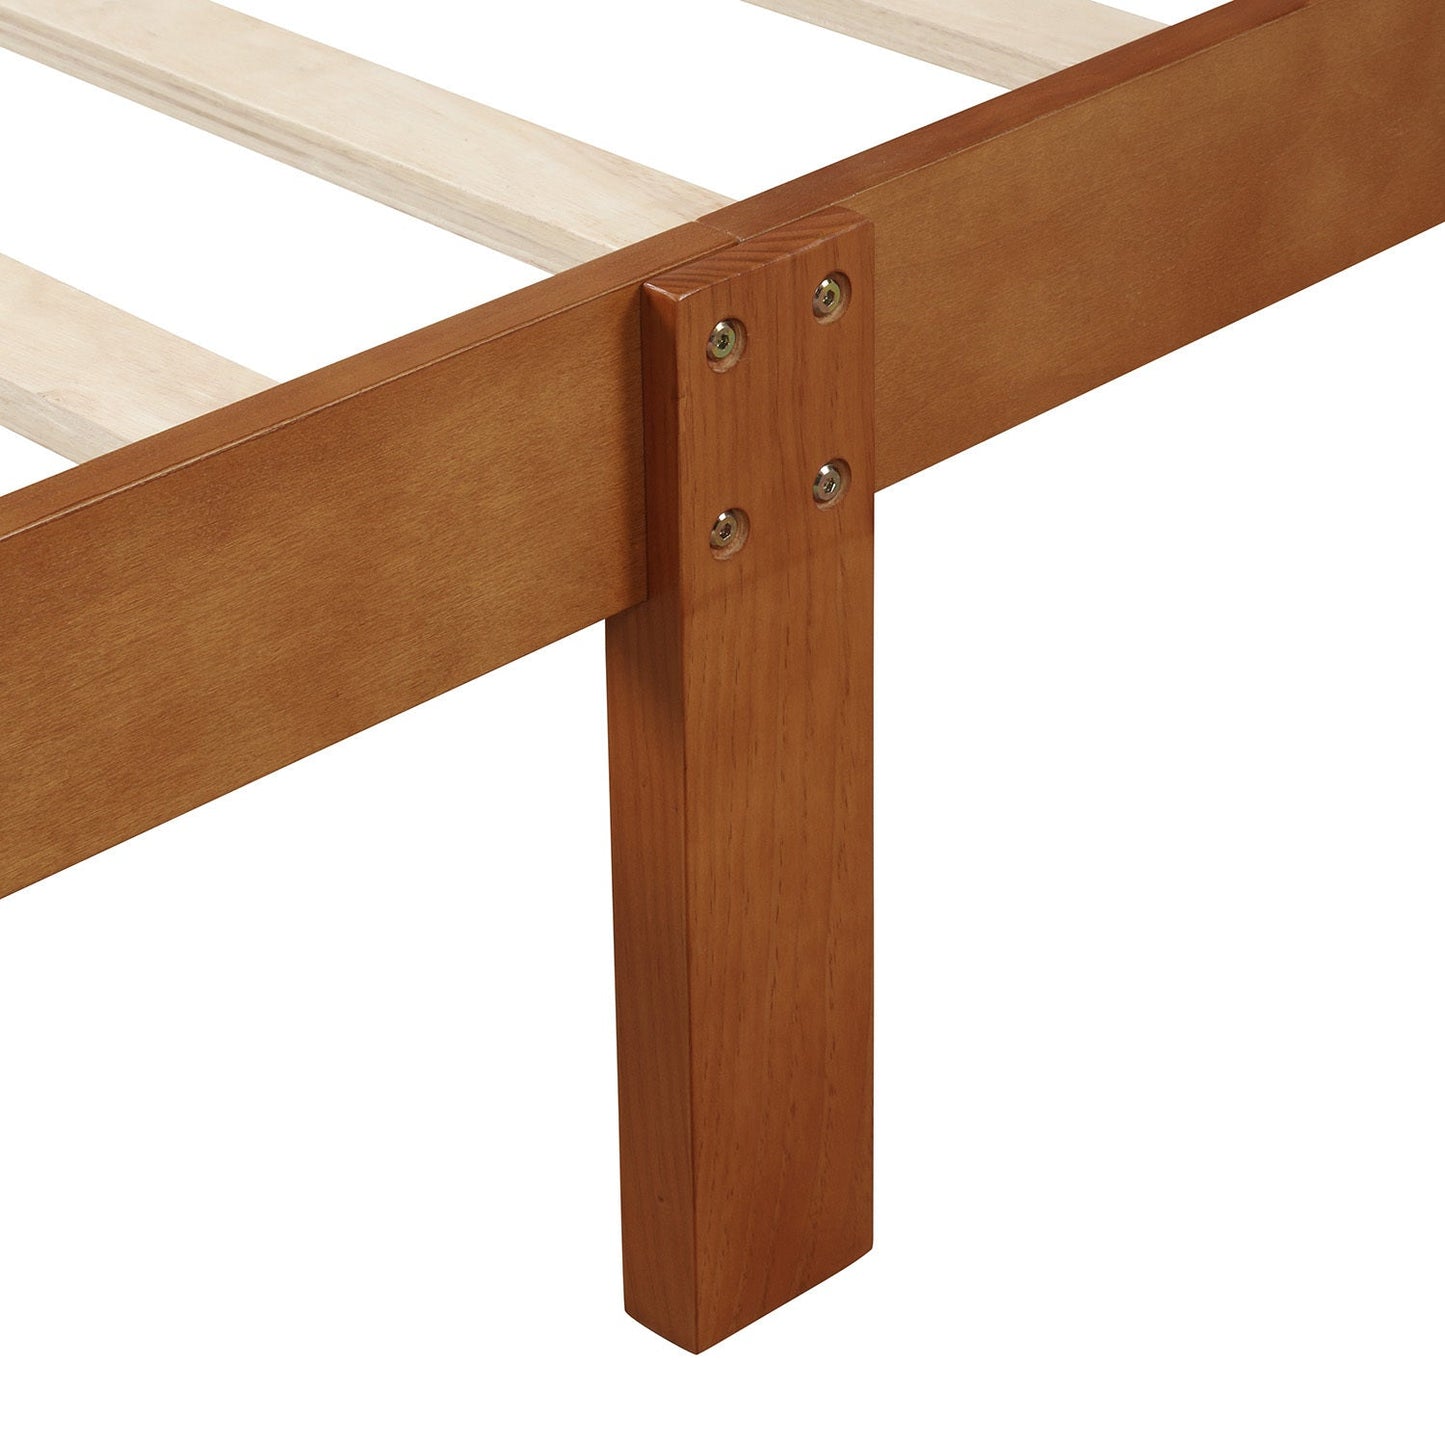 Pescara Wood Platform Bed Twin Bed Frame Mattress Foundation Sleigh Bed